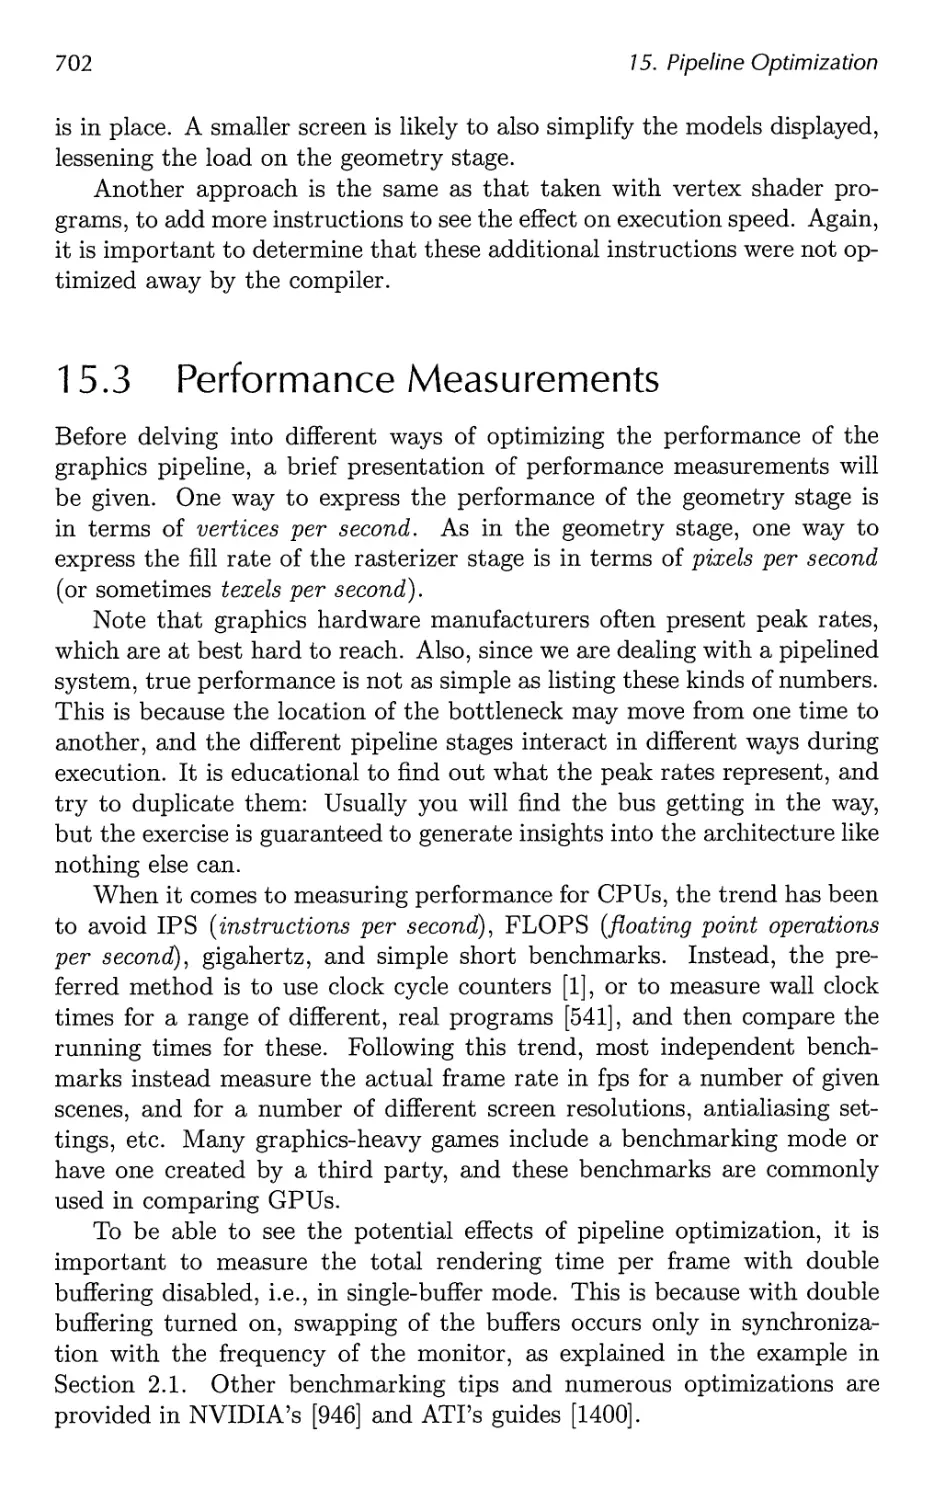 15.3 Performance Measurements